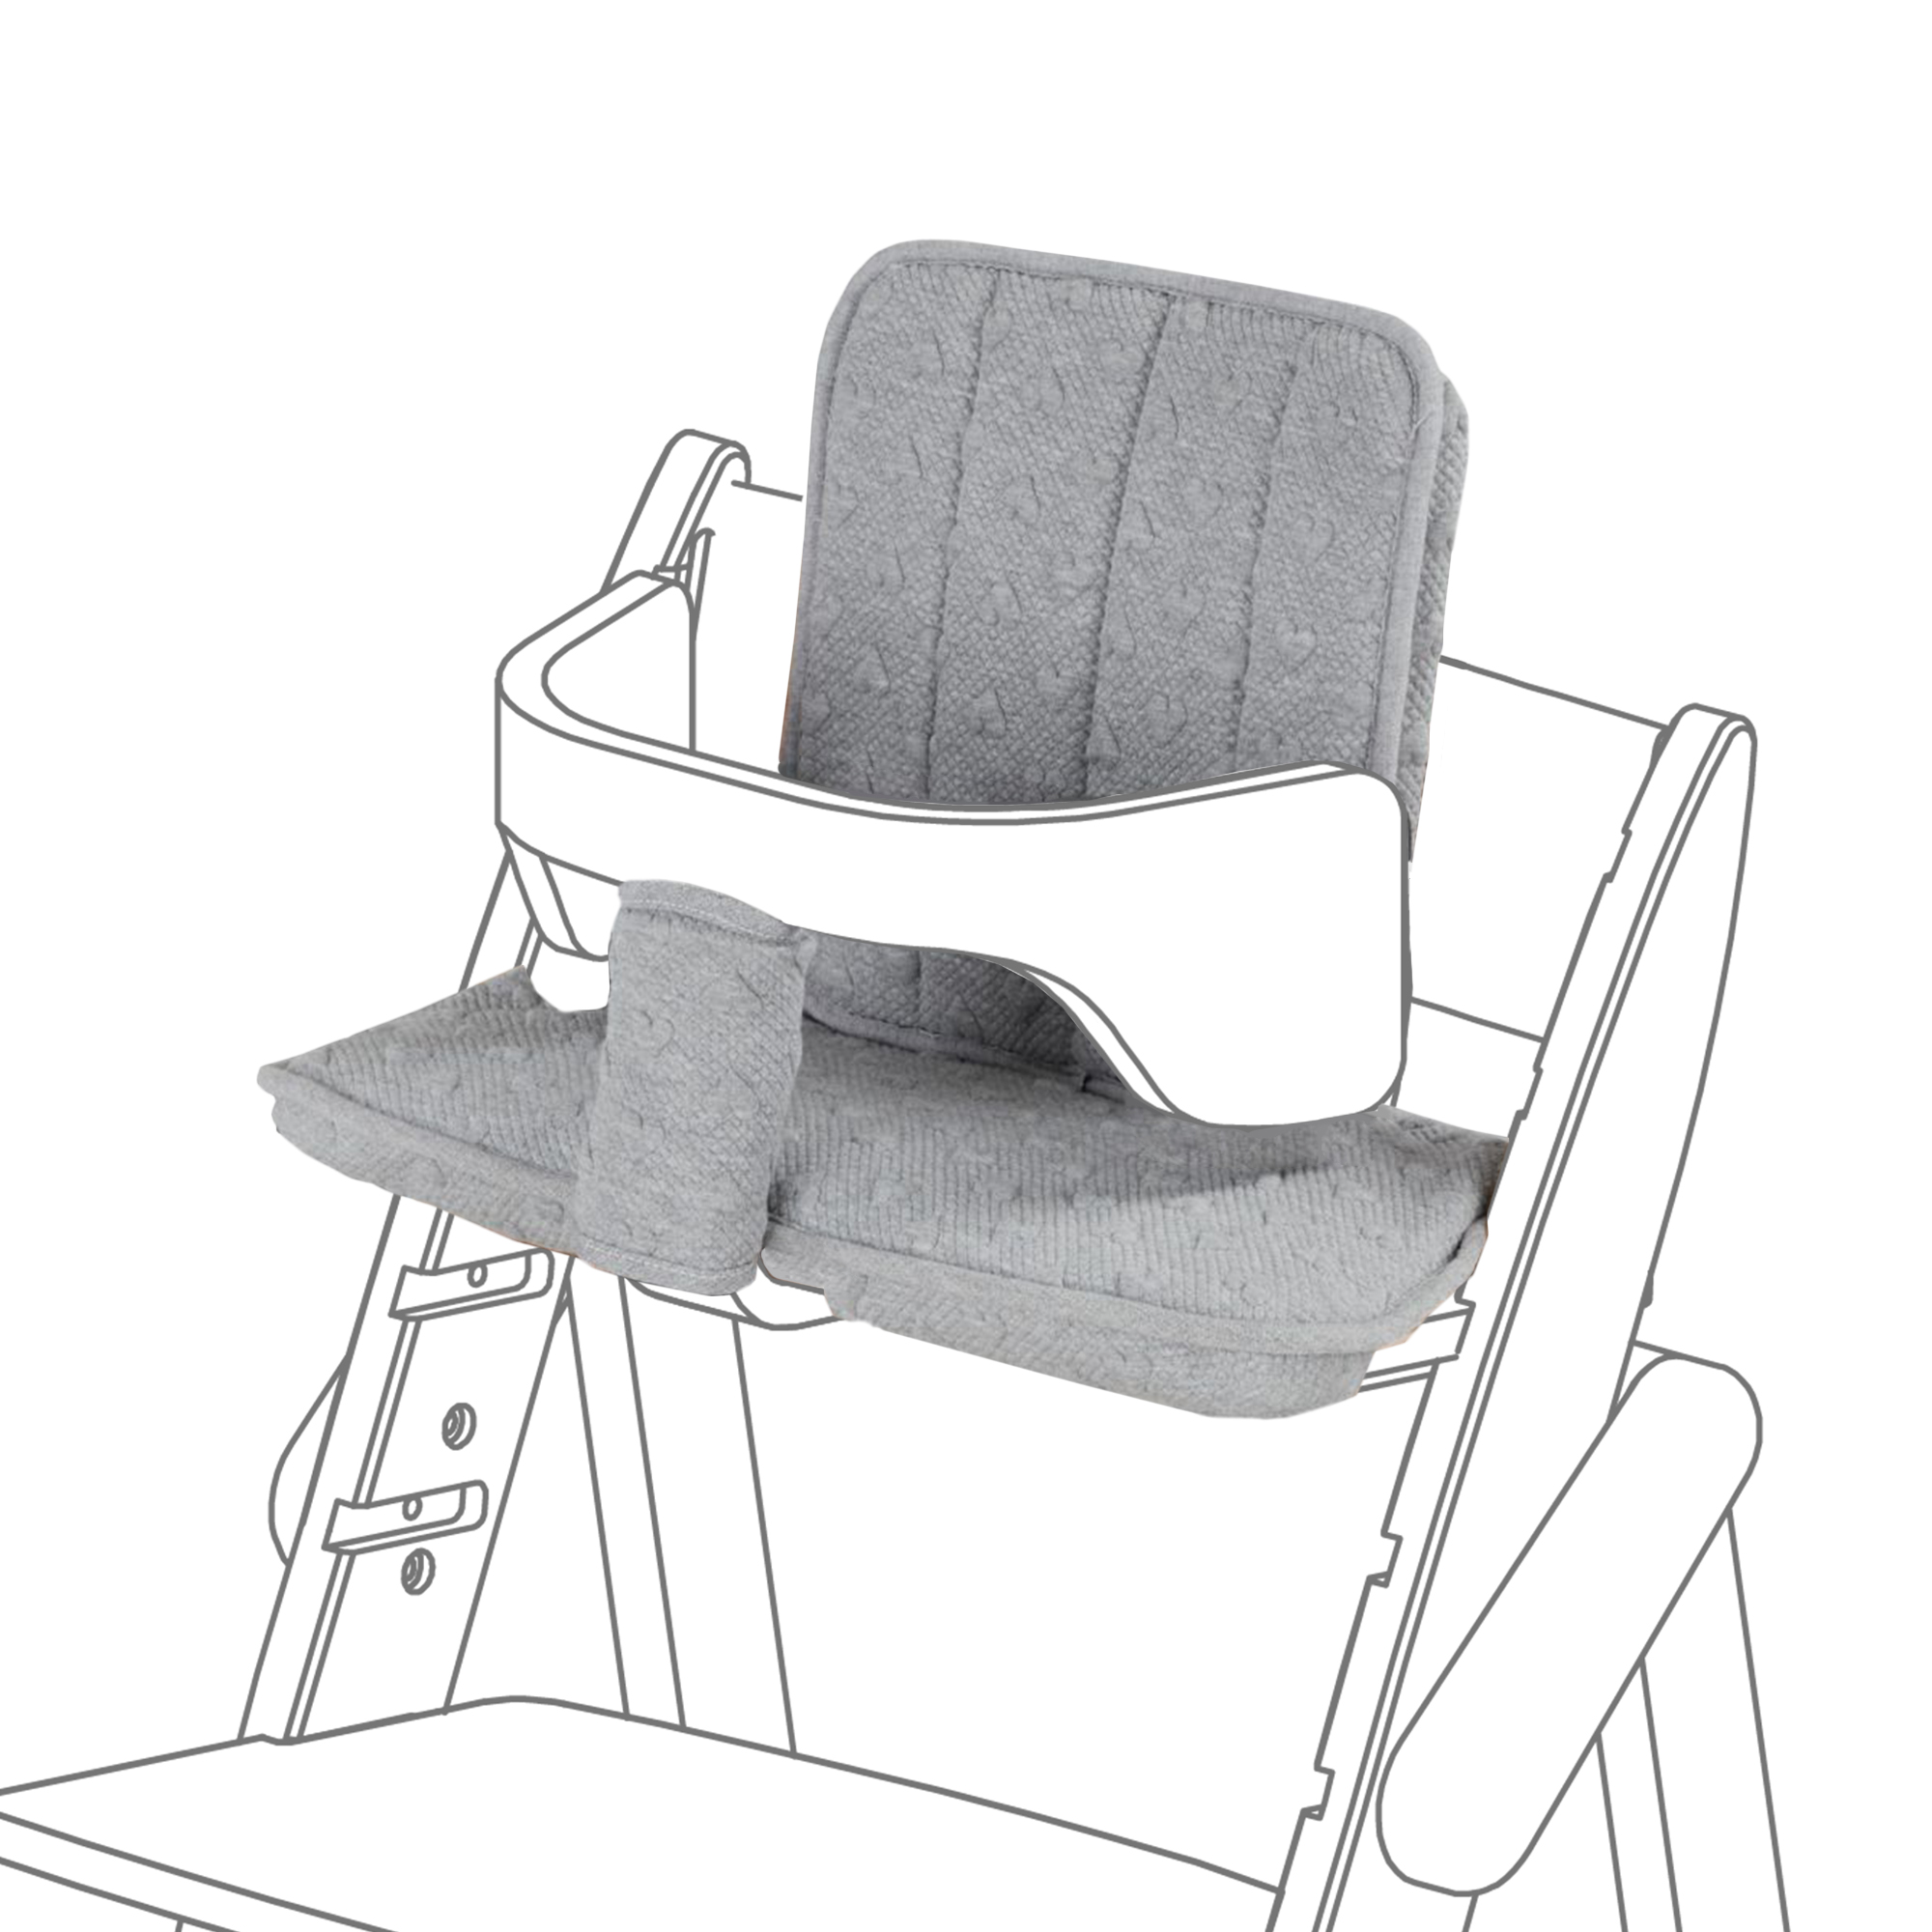 Набор подушек Moji Cushion Set для стульчика Yippy heart 12003342016 набор подушек moji cushion set для стульчика yippy mint 12003342213